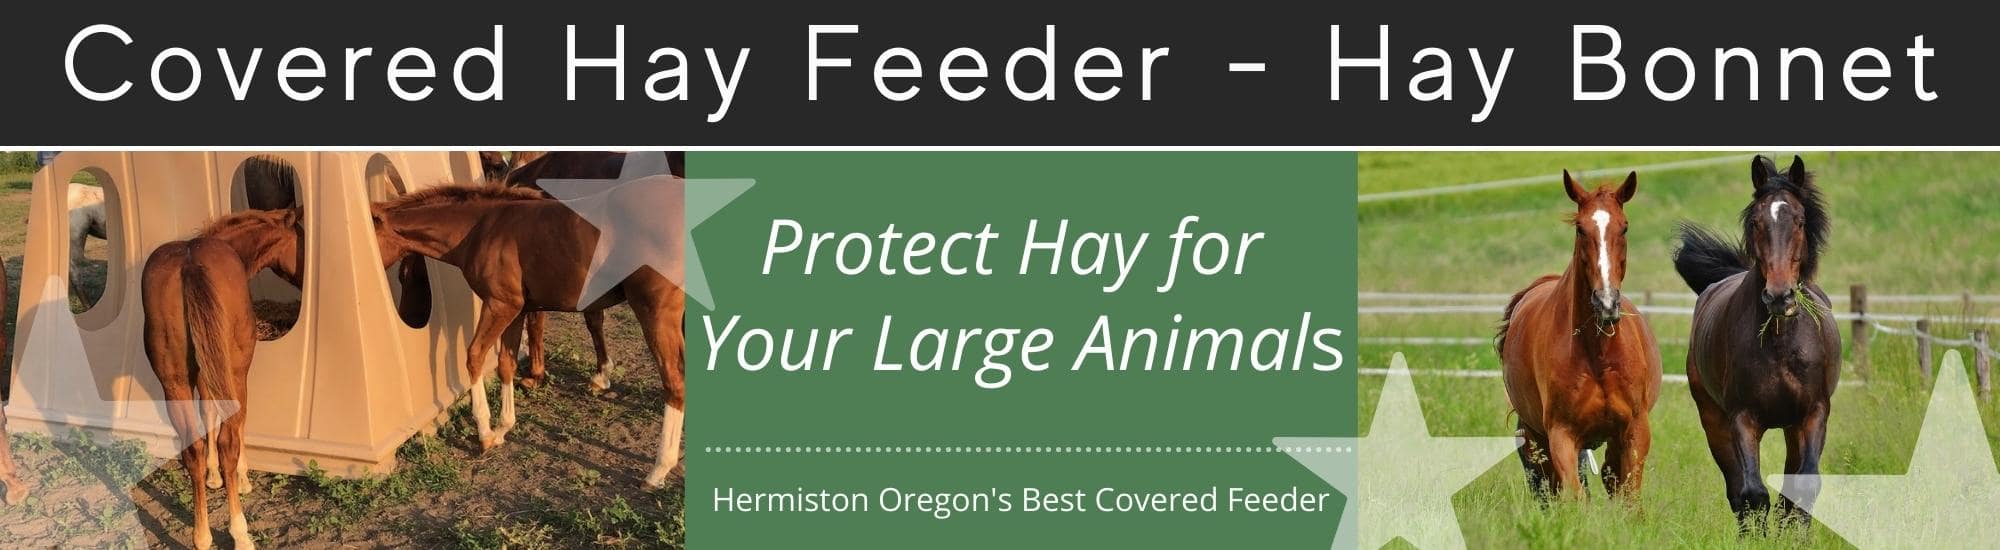 Covered Horse Hay Feeder - Hermiston Oregon